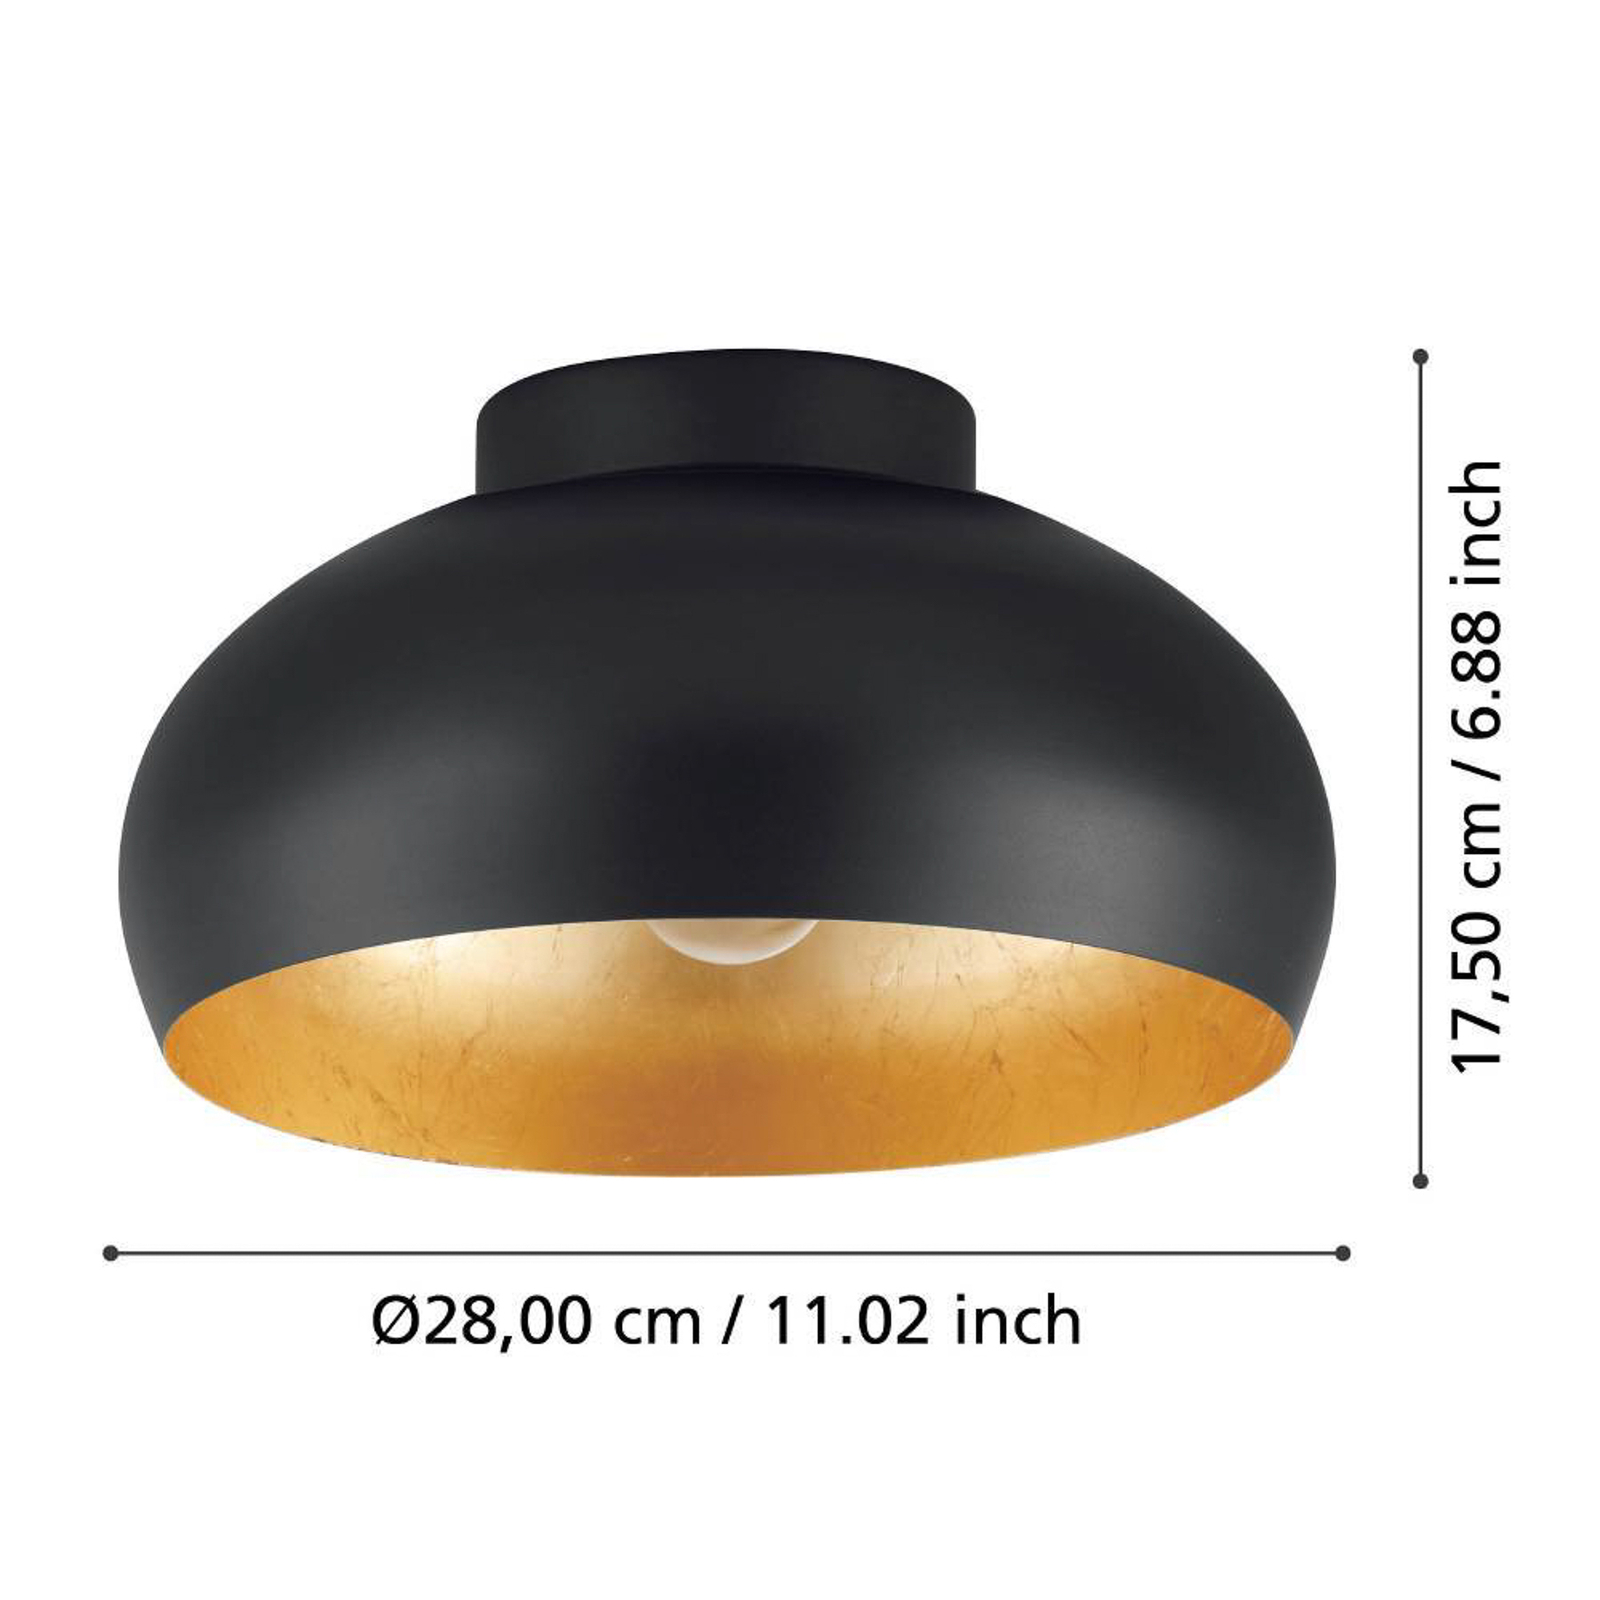 EGLO Mogano 2 plafondlamp, Ø28cm, zwart/goud